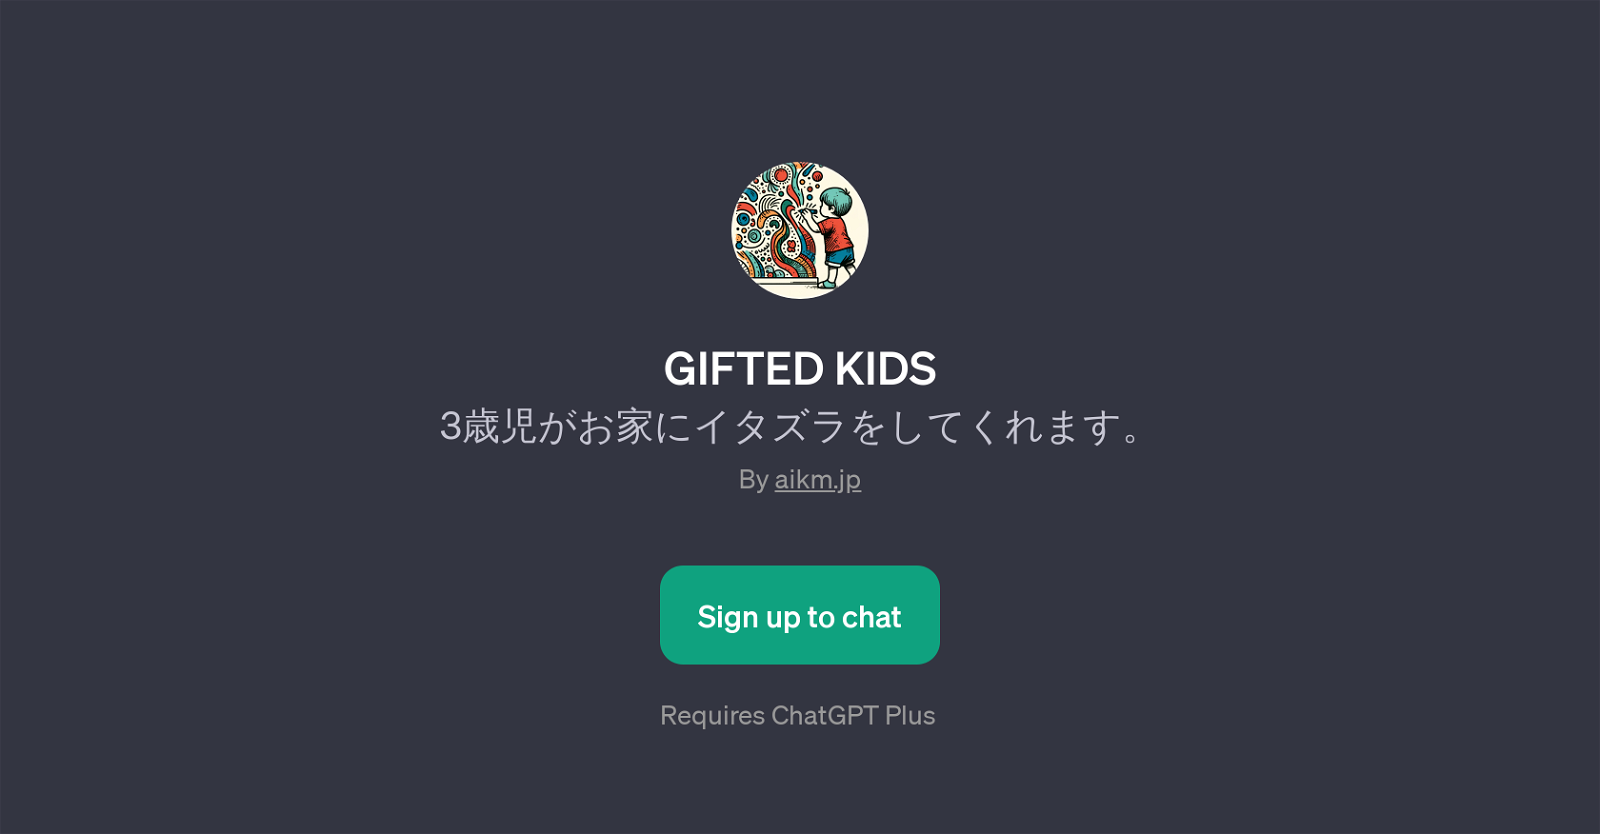 GIFTED KIDS website